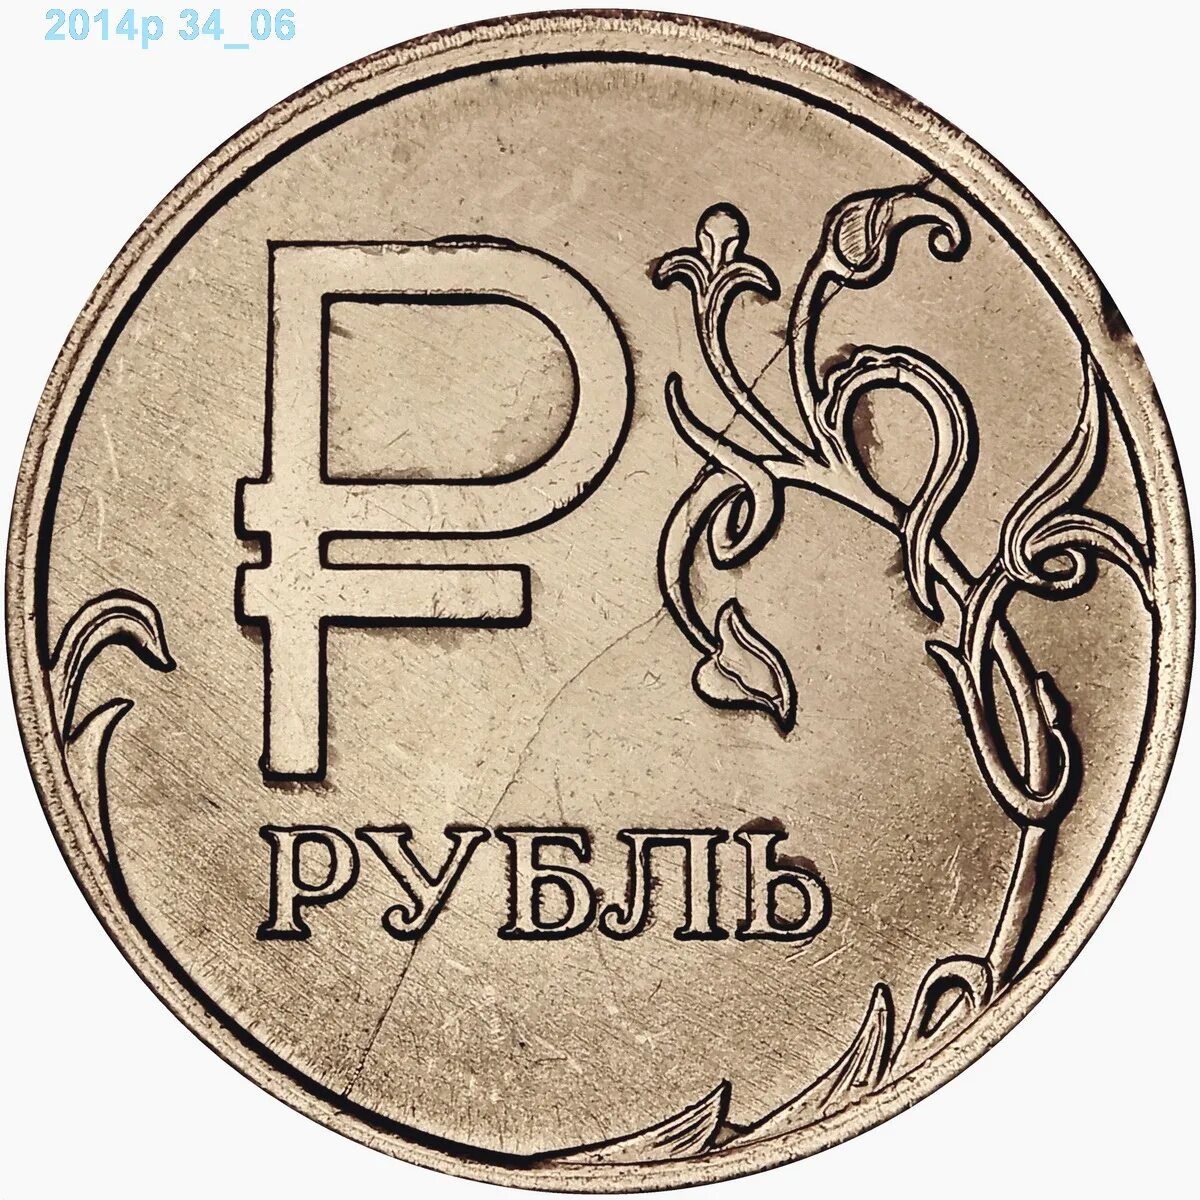 Вон рубл. Символ рубля. Логотип рубля. Монеты рубли. Денежный знак рубля.